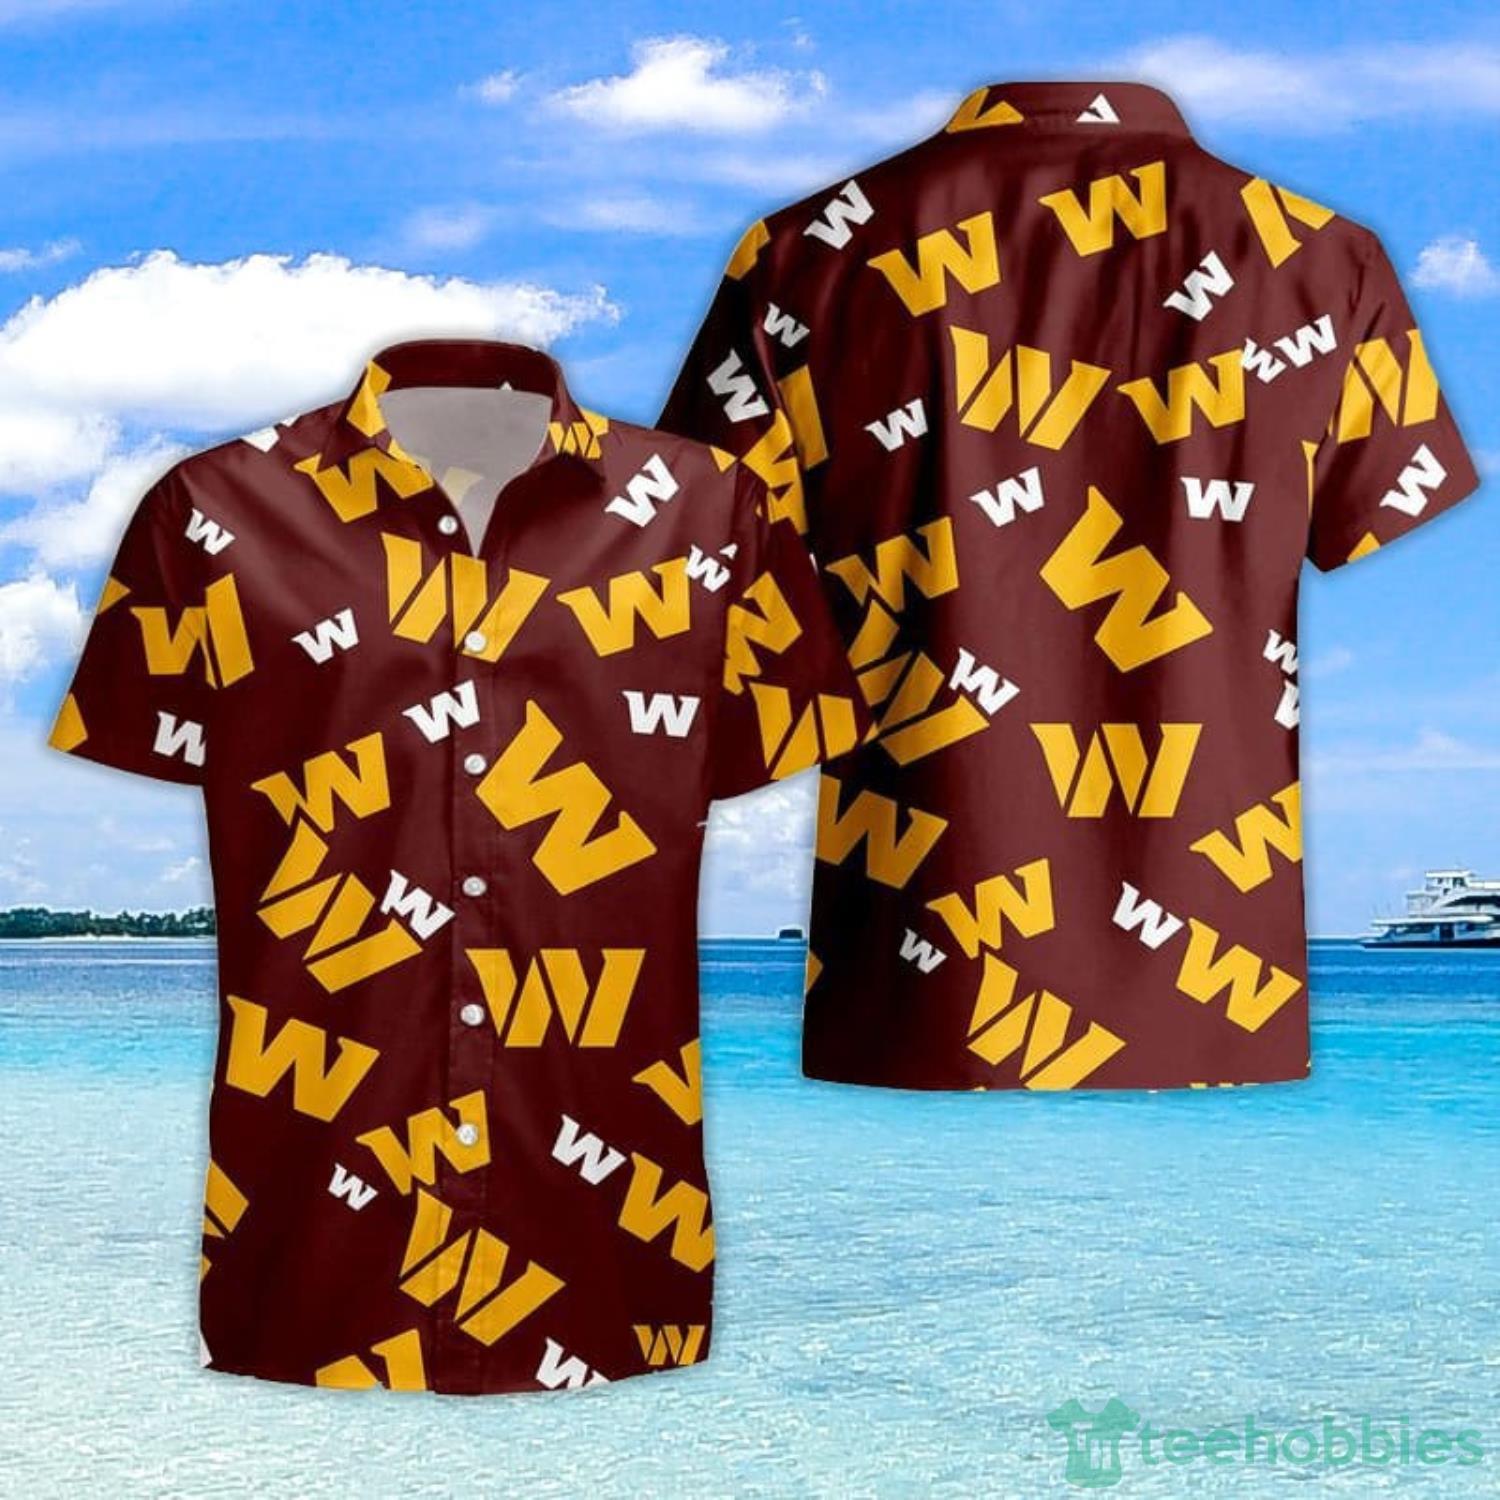 Washington Commanders Limited Edition Hawaiian Shirt And Shorts For Fans Product Photo 1